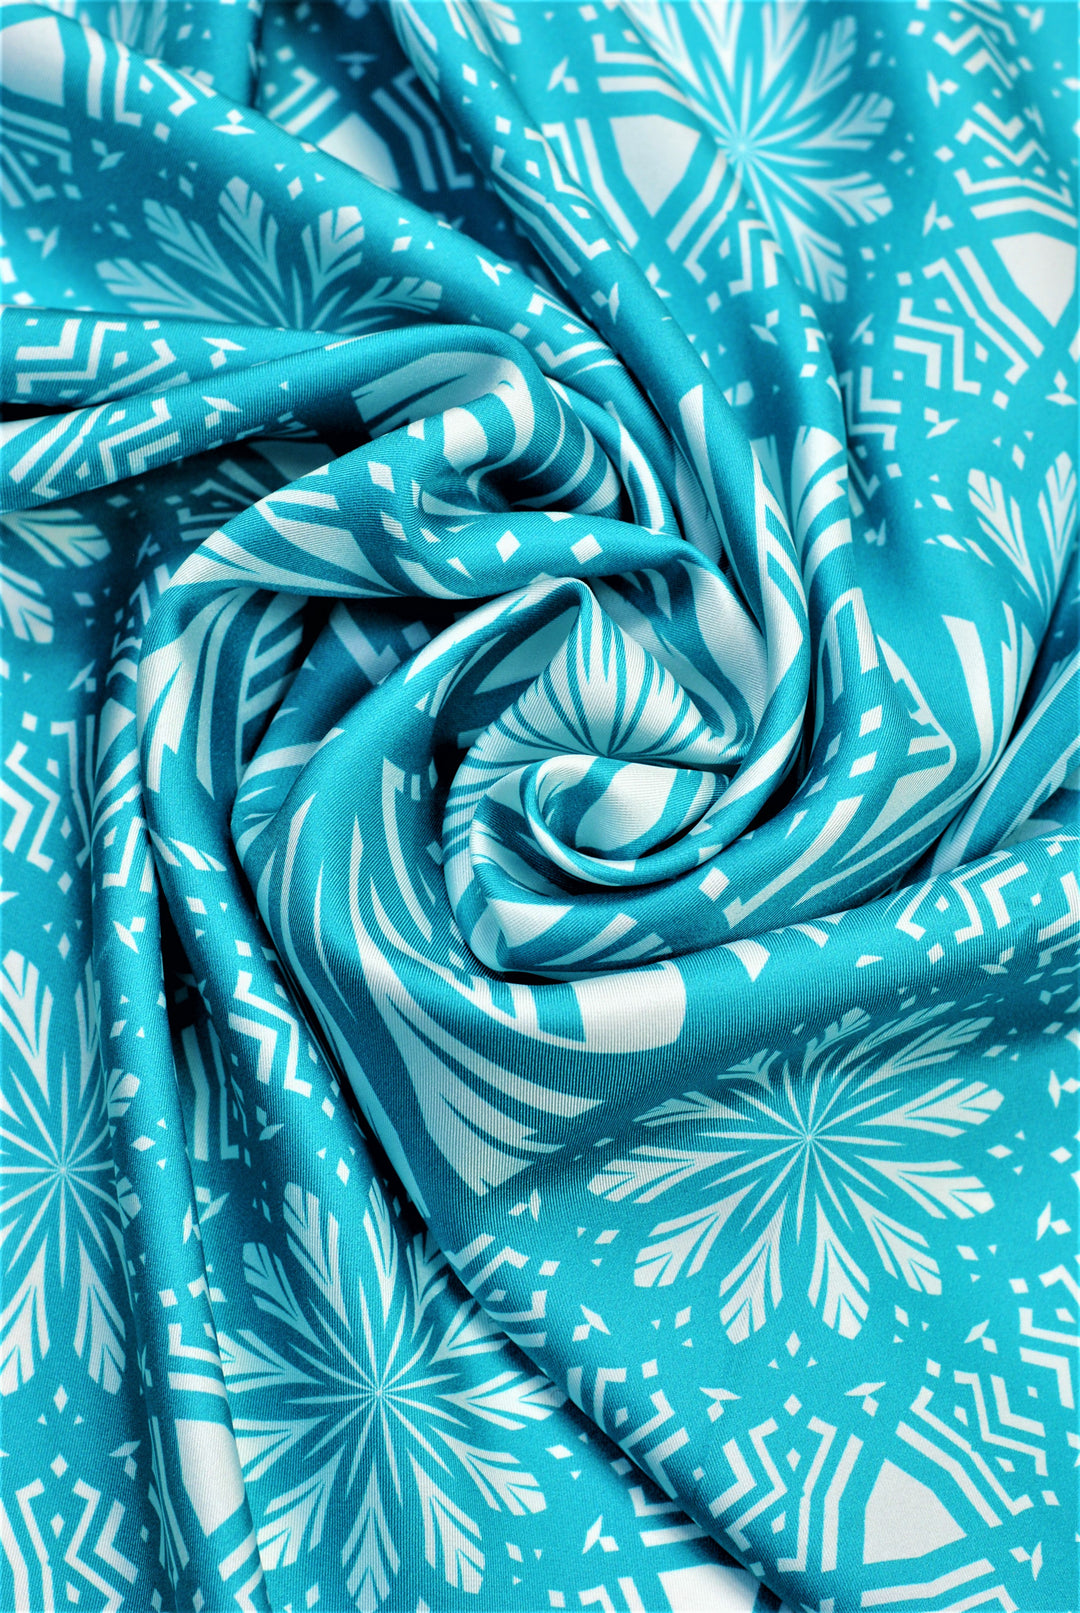 SERENITY Mandala Art Pure Silk Scarf in Turquoise White Alesia C.